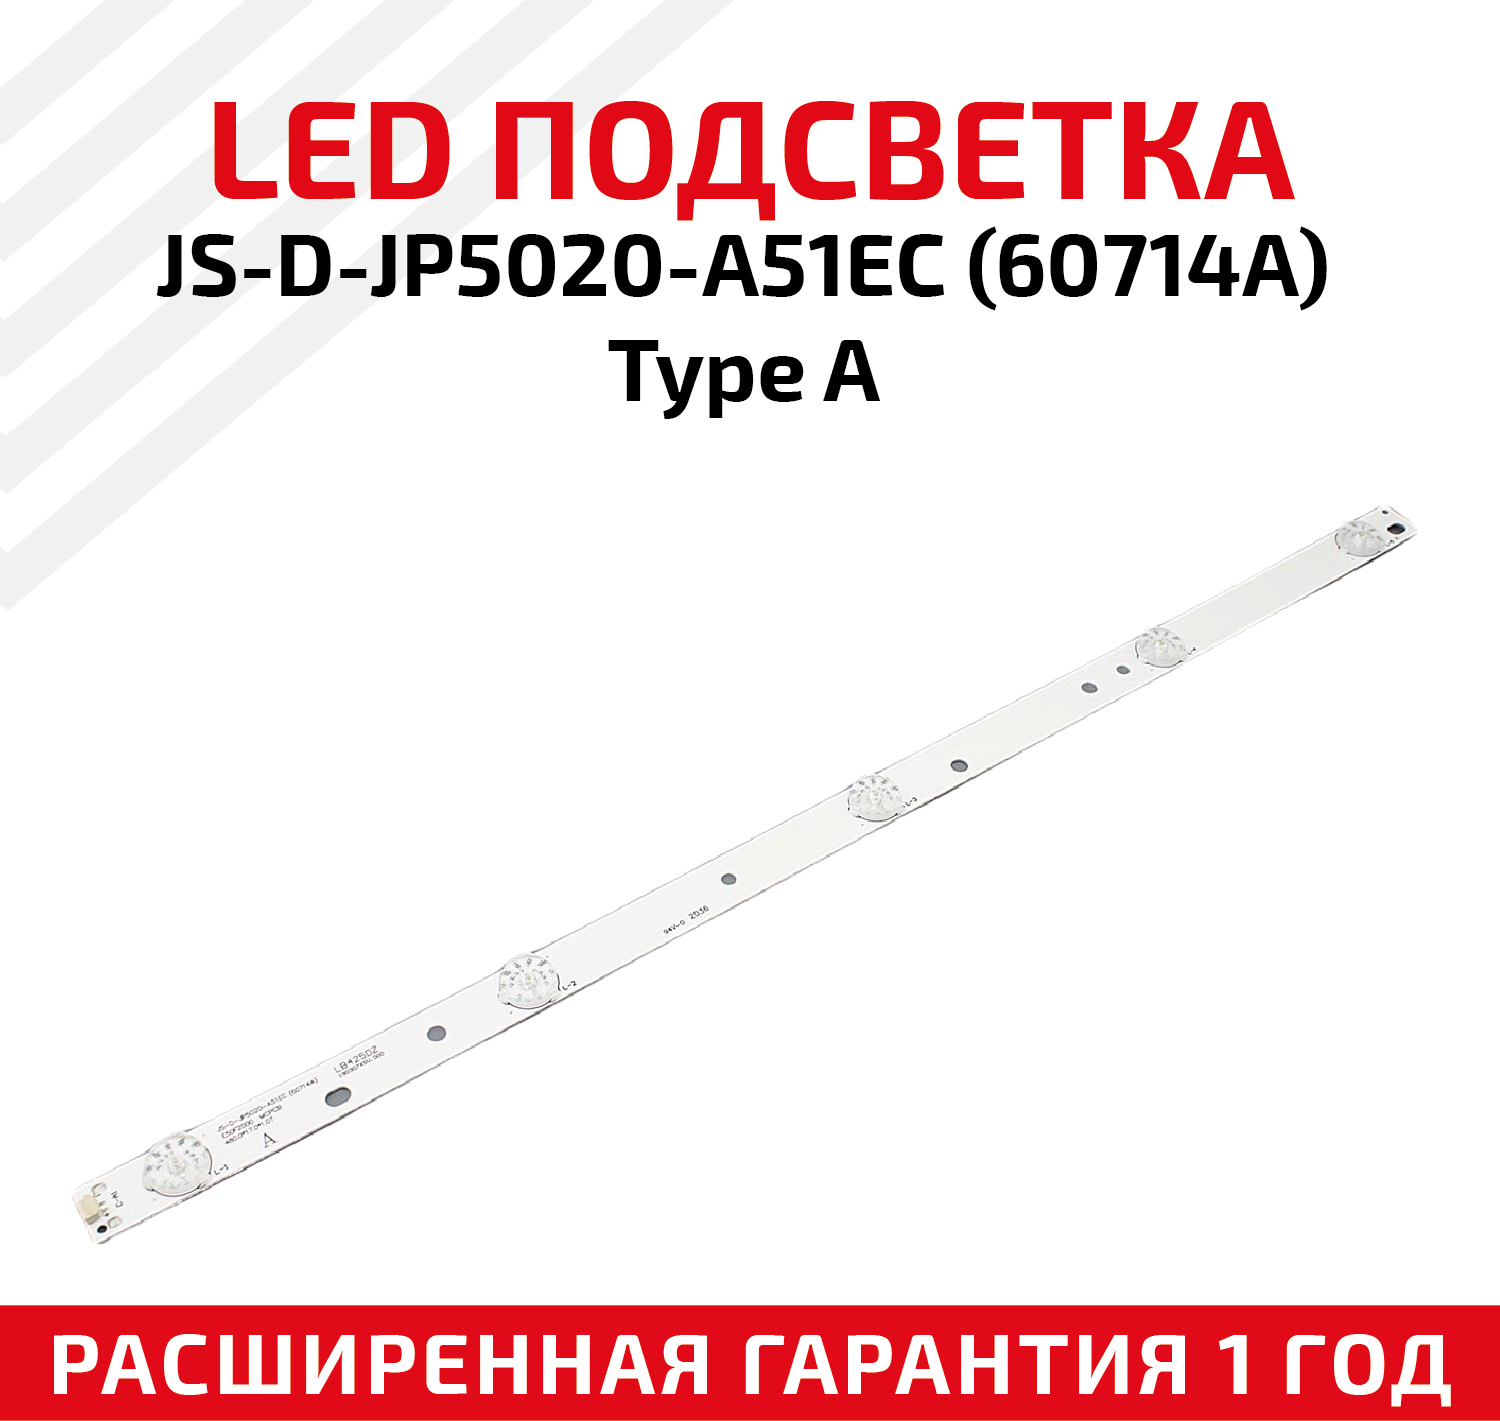 LED подсветка (светодиодная планка) для телевизора JS-D-JP5020-A51EC (60714A) Type-A